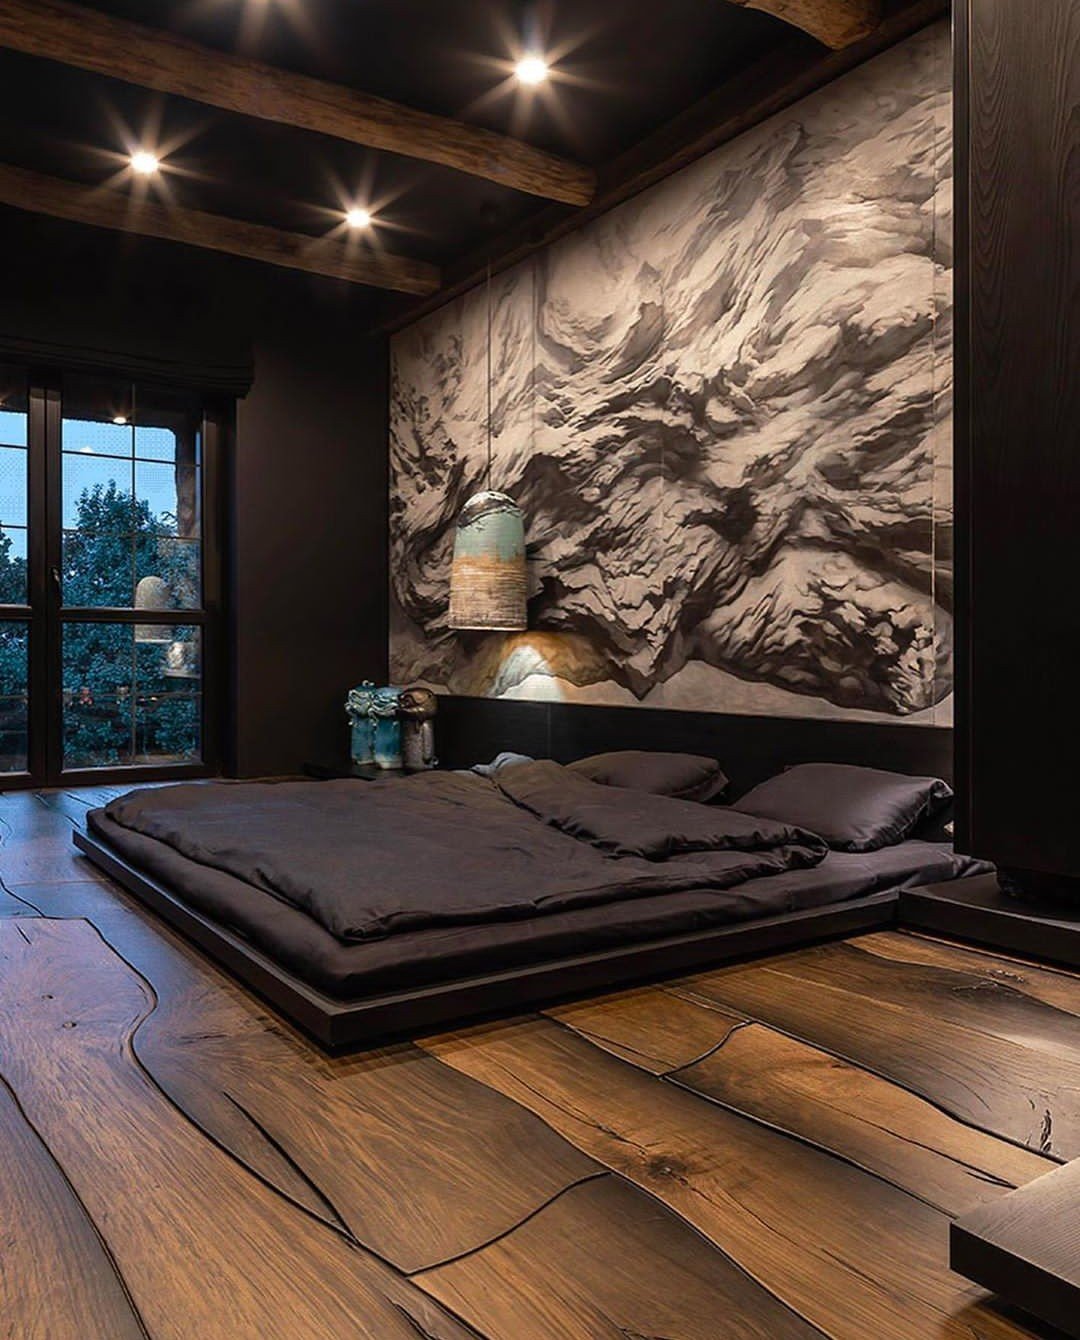 Modern bedroom designs